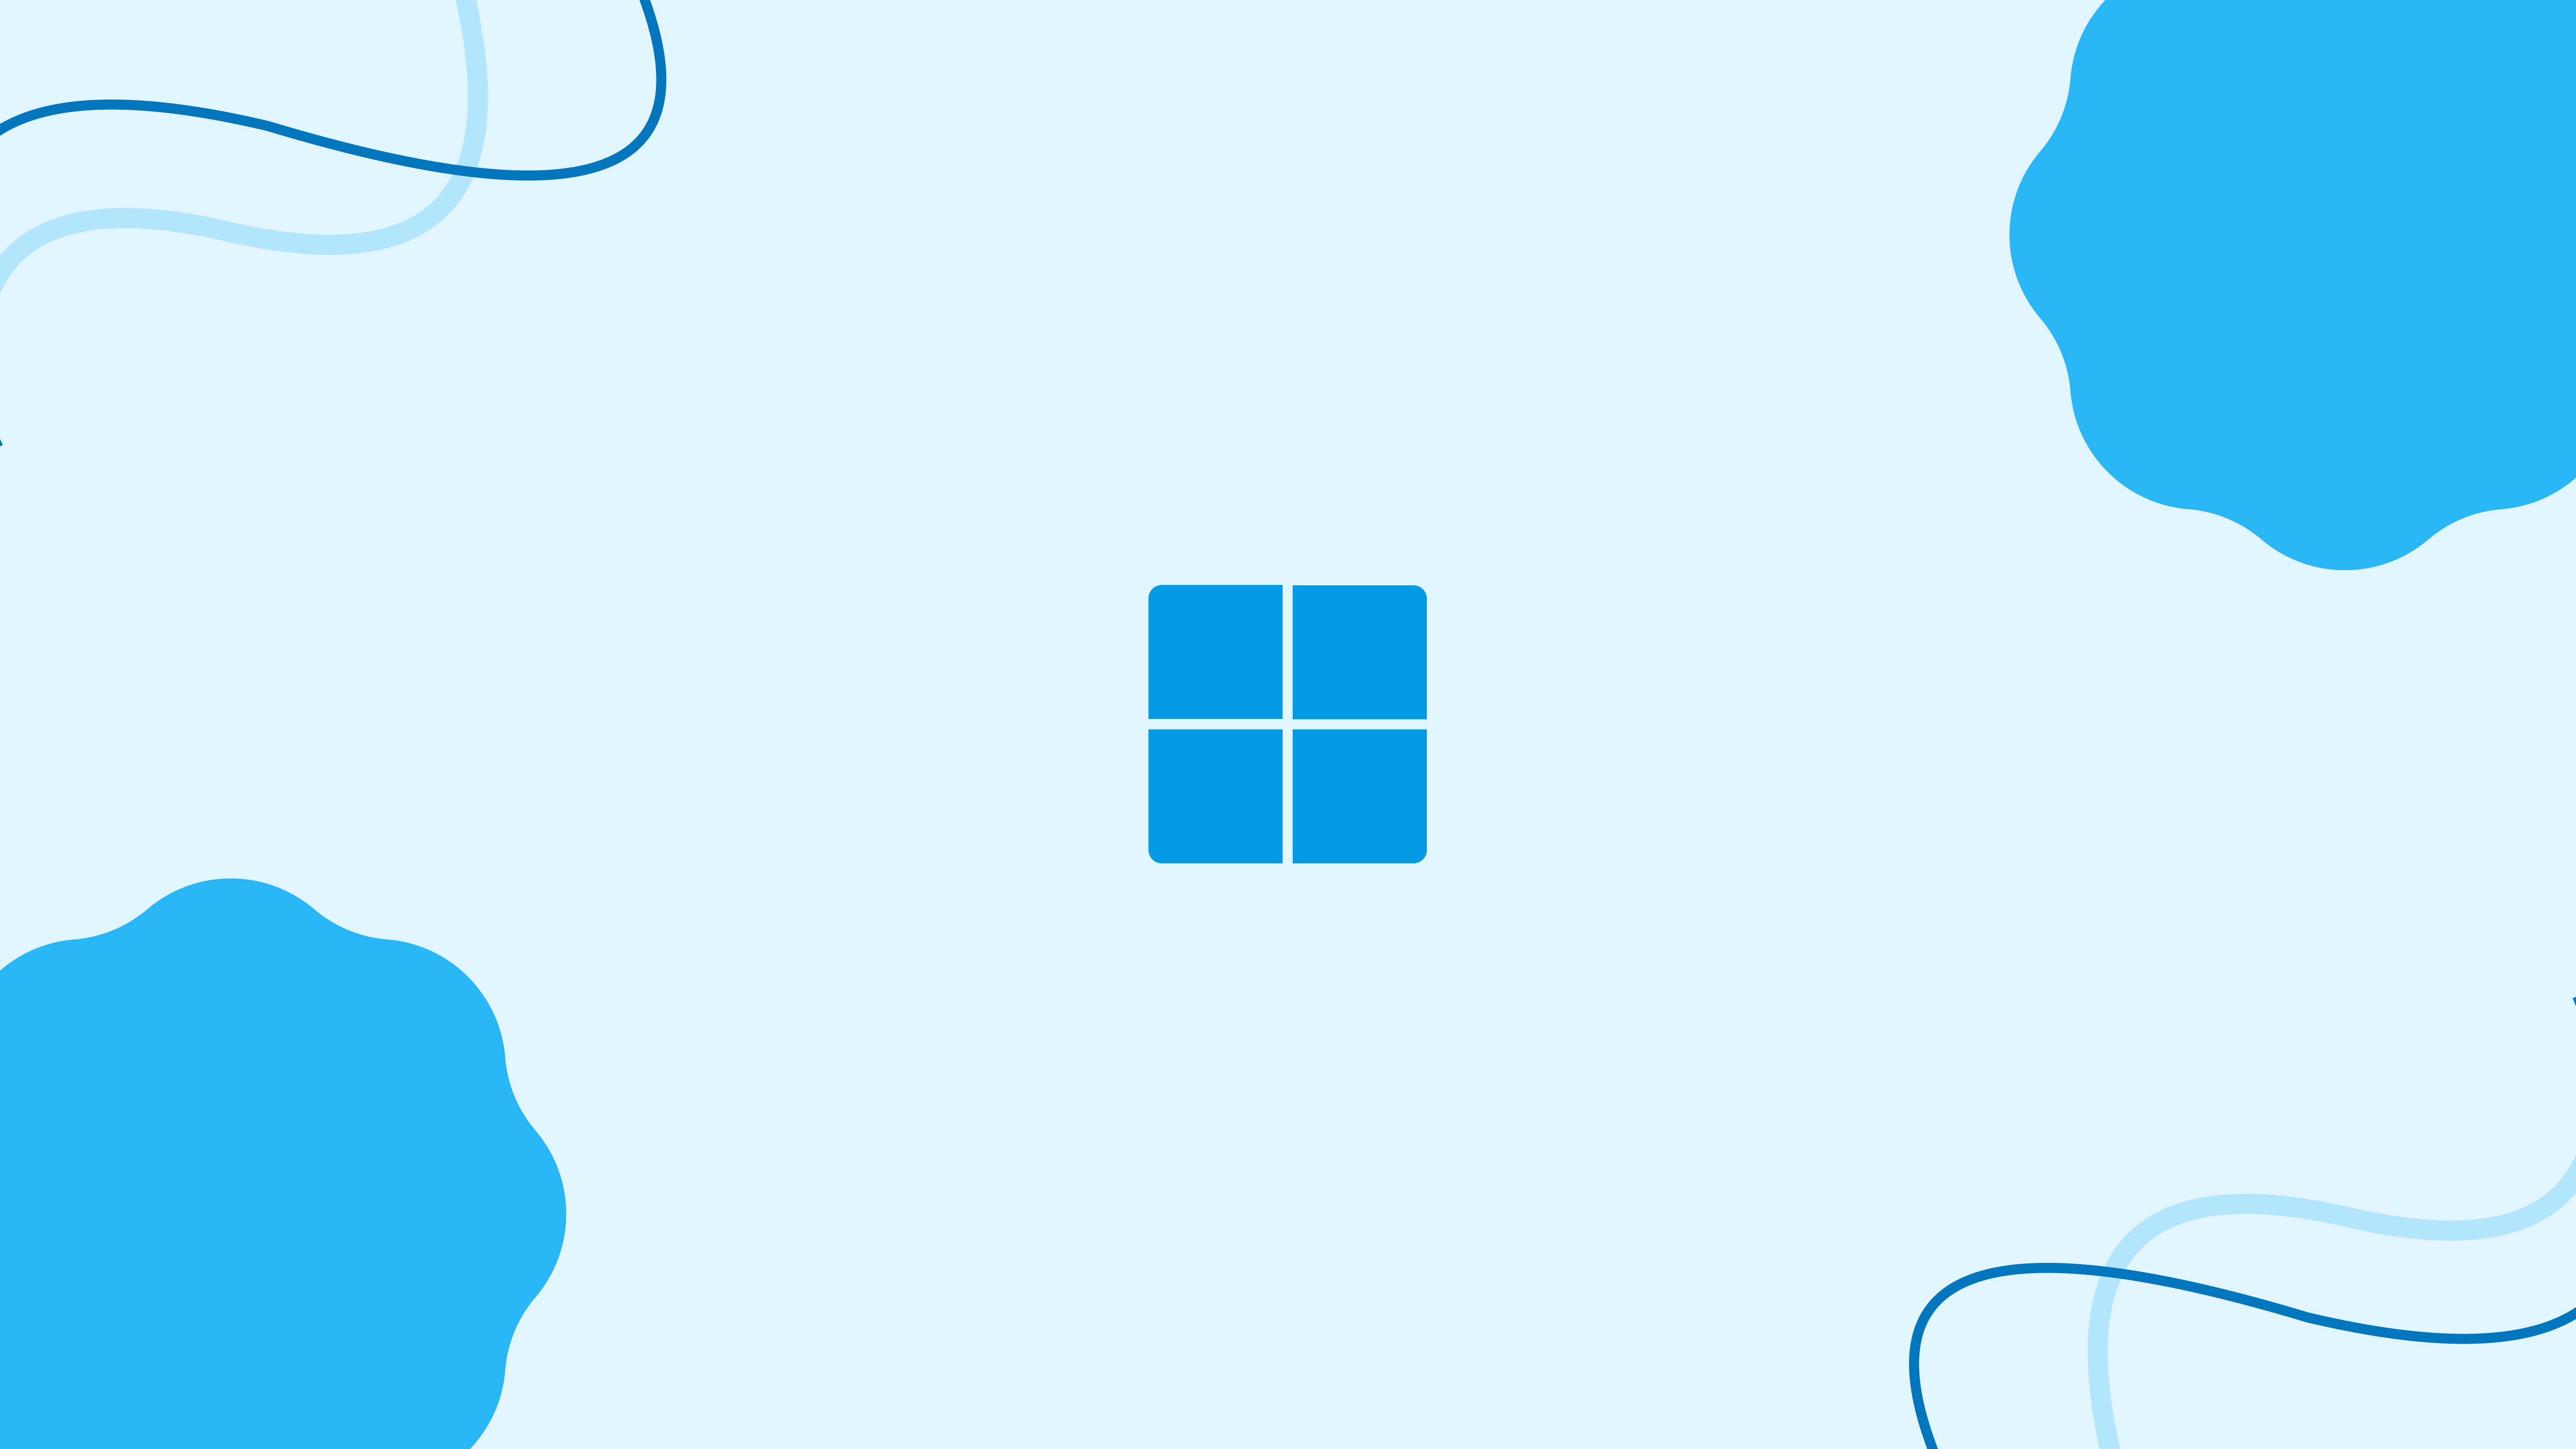 Windows k ultra hd windows microsoft logo minimalist